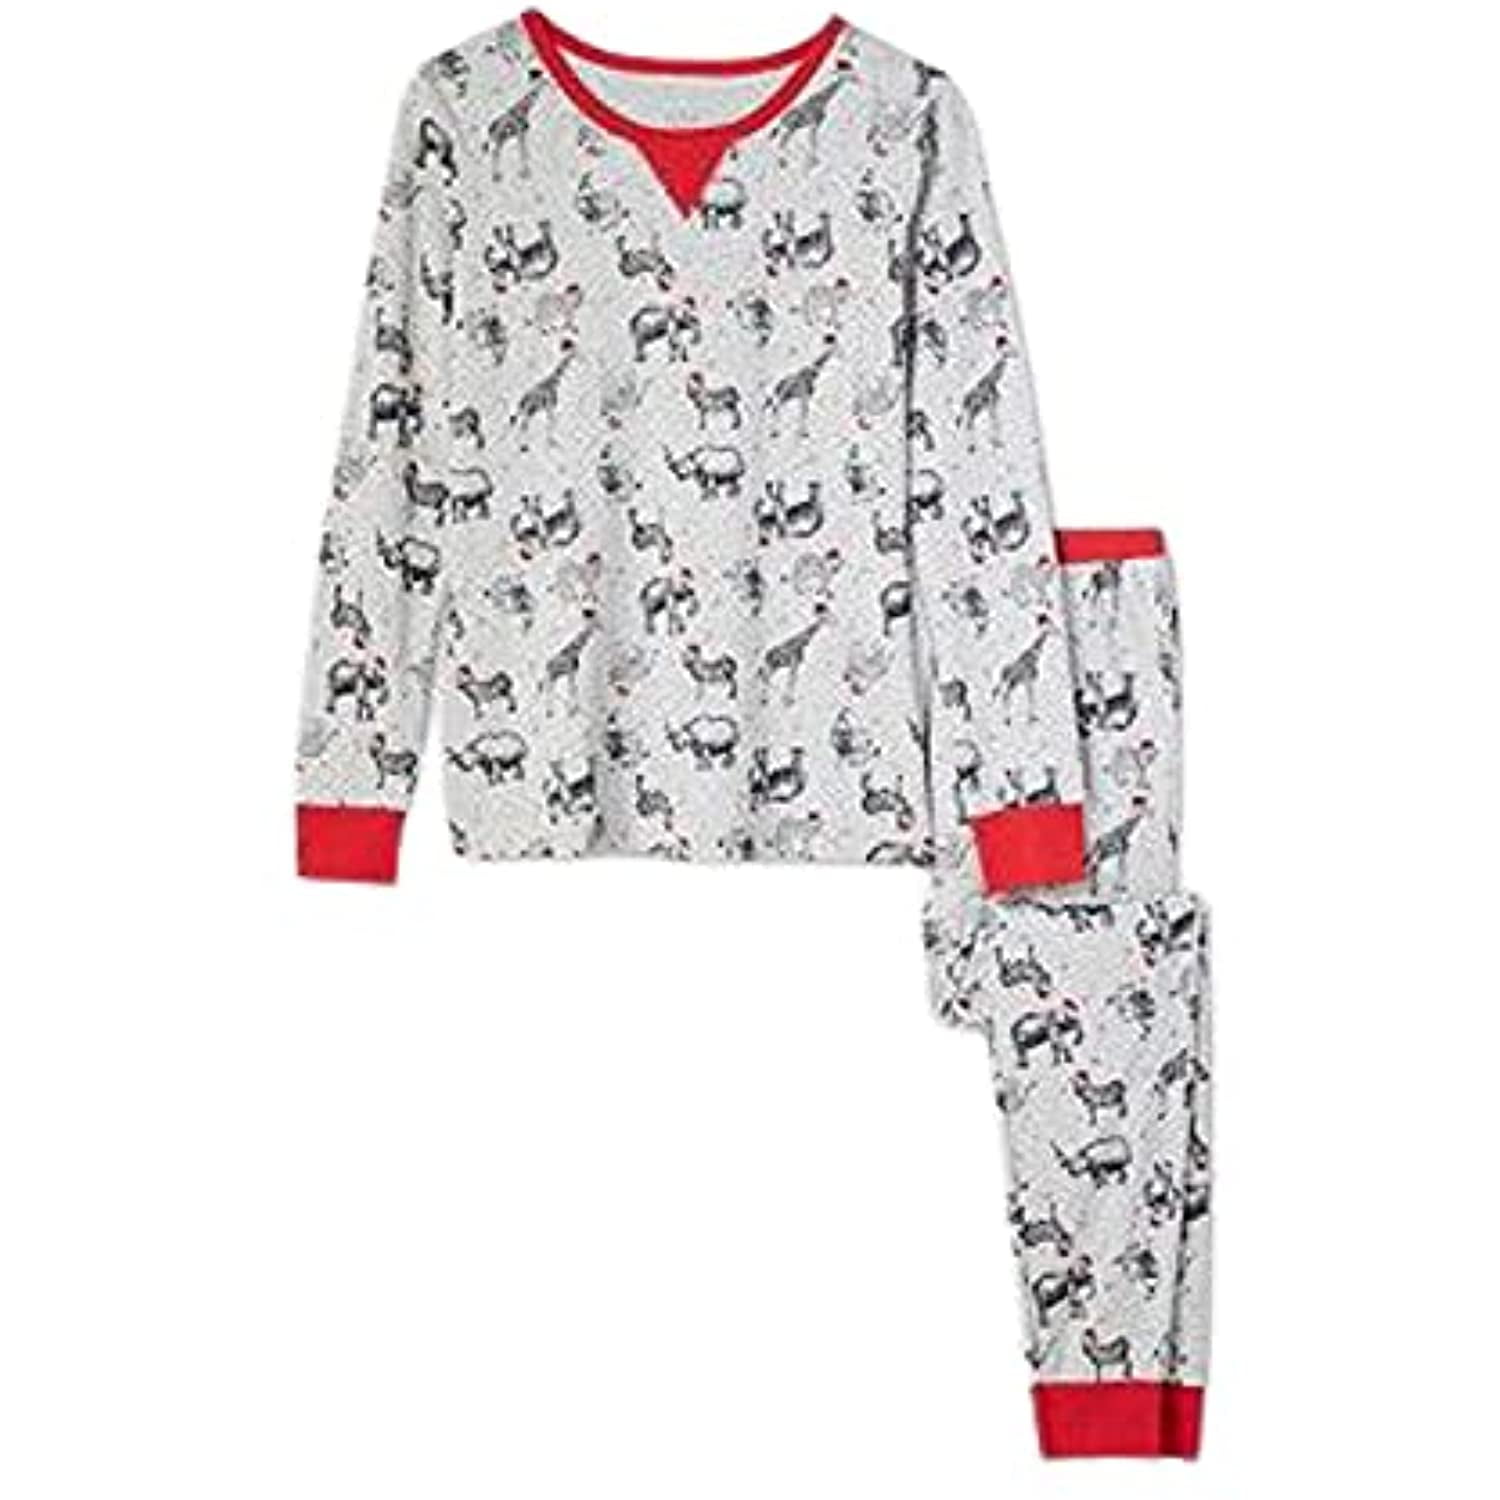 Women's Holiday Safari Animal Print Pajama Set - Small by Wondershop Grey